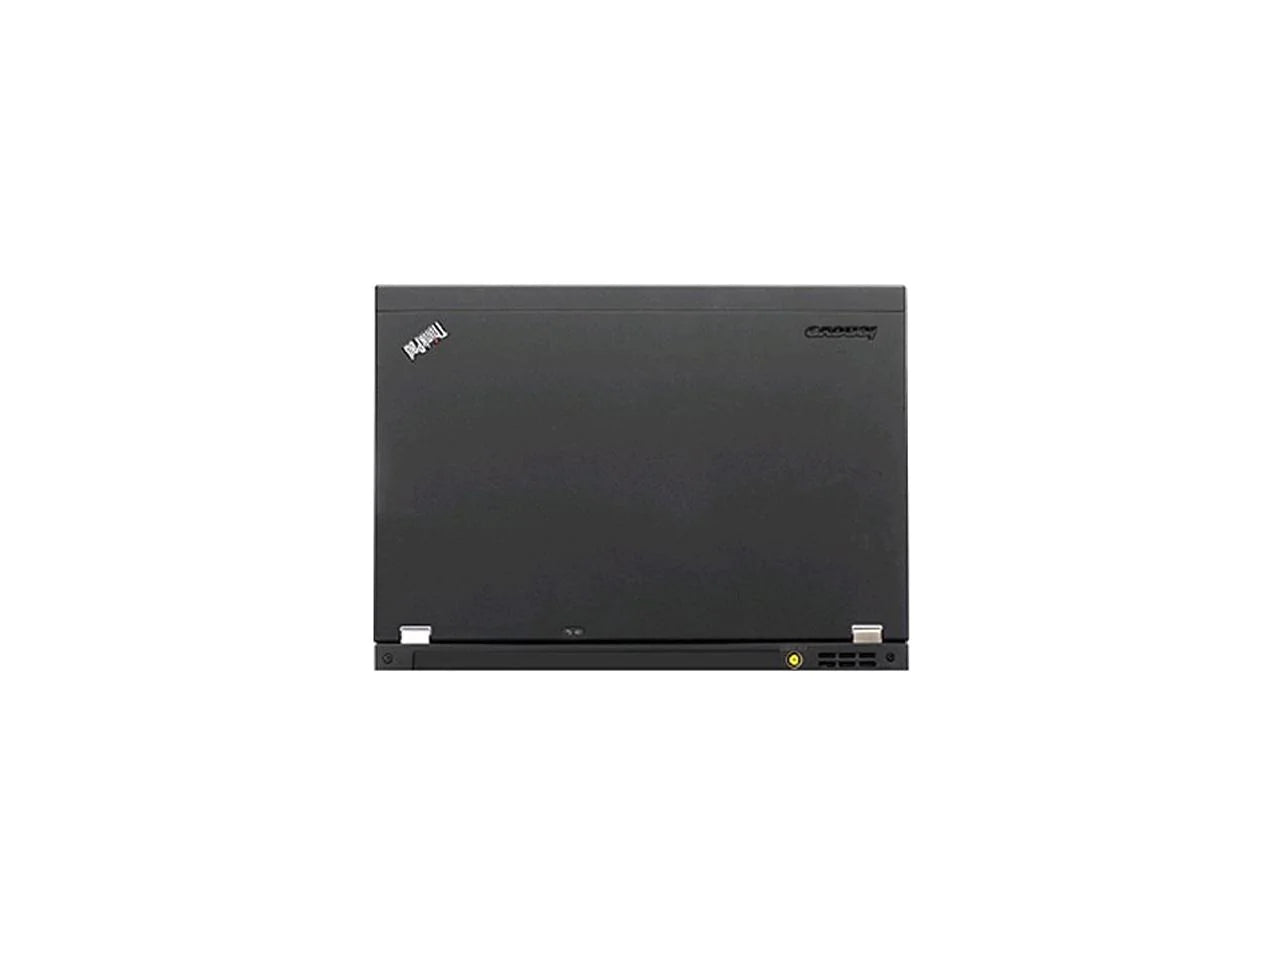 Lenovo ThinkPad T430 i5-3320M 2.60GHz 8GB RAM 1TB HDD Intel HD 4000 Webcam Win 10 Pro